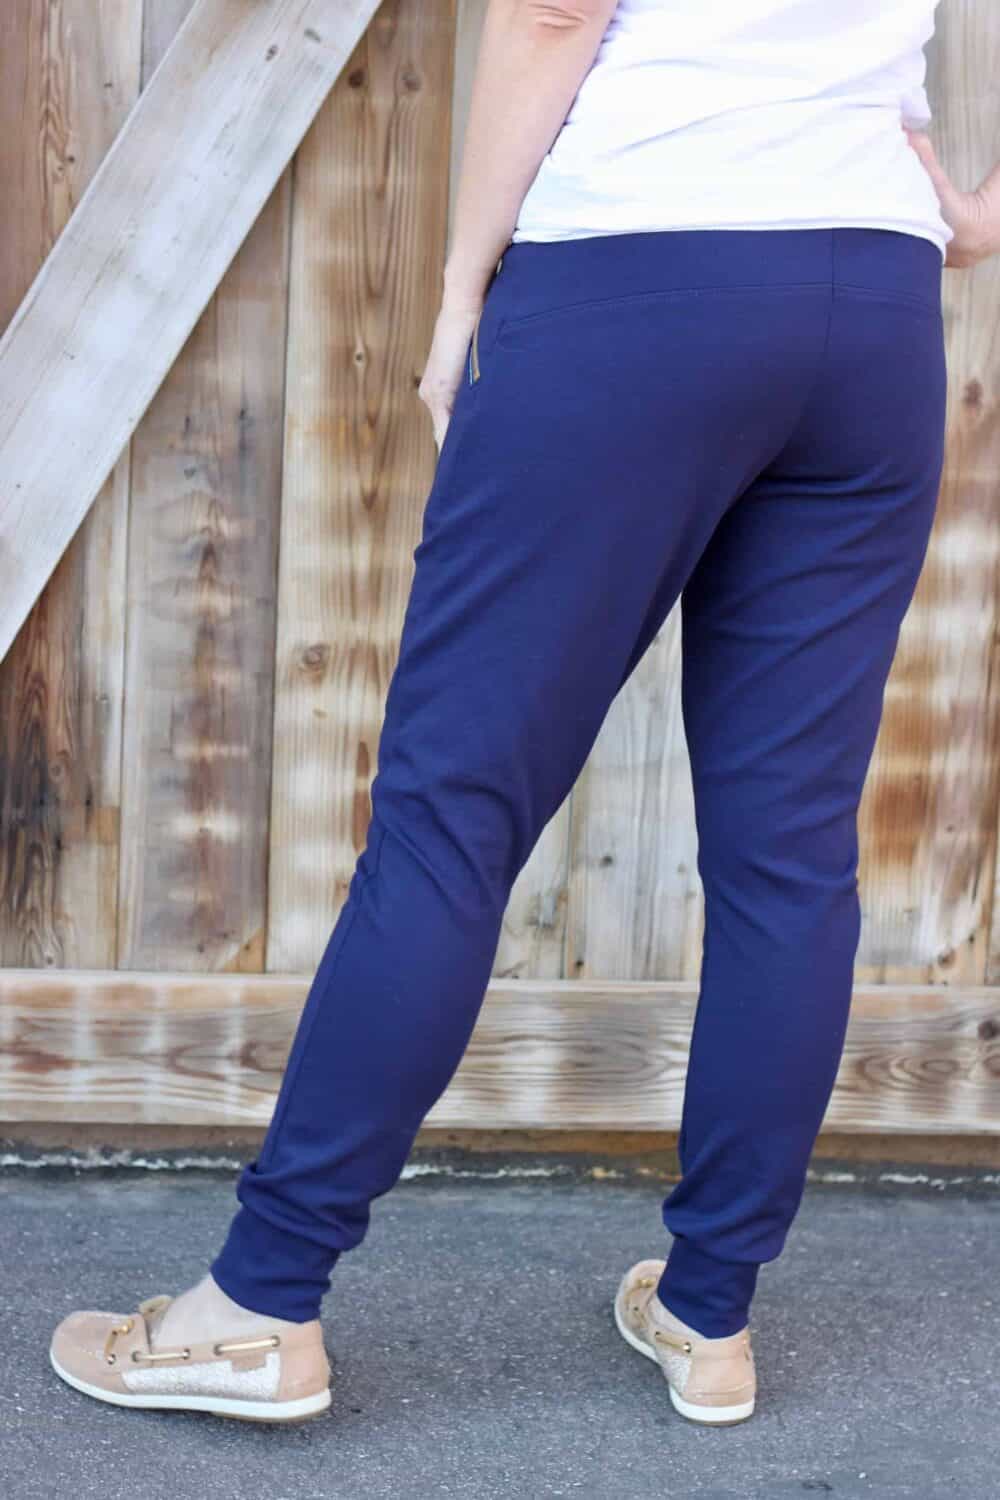 Lora Dora Jersey Cotton Joggers Tracksuit Sweatpants with Pockets